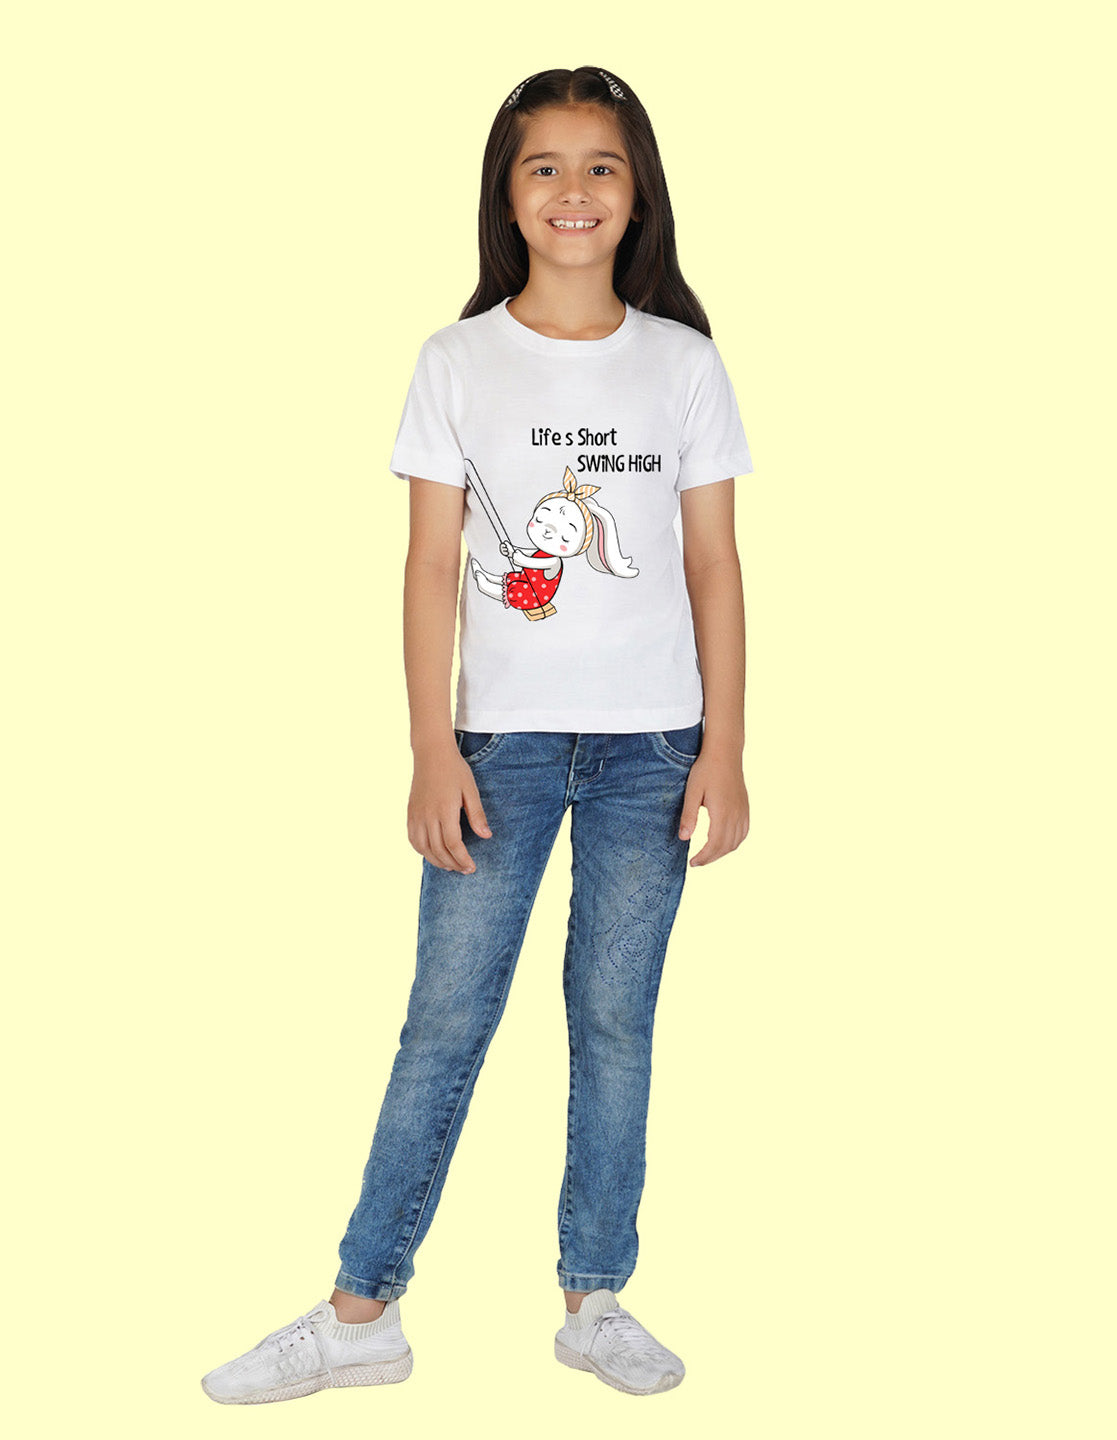 Nusyl Girls Half Sleeves White Life's short swing high printed T-shirt